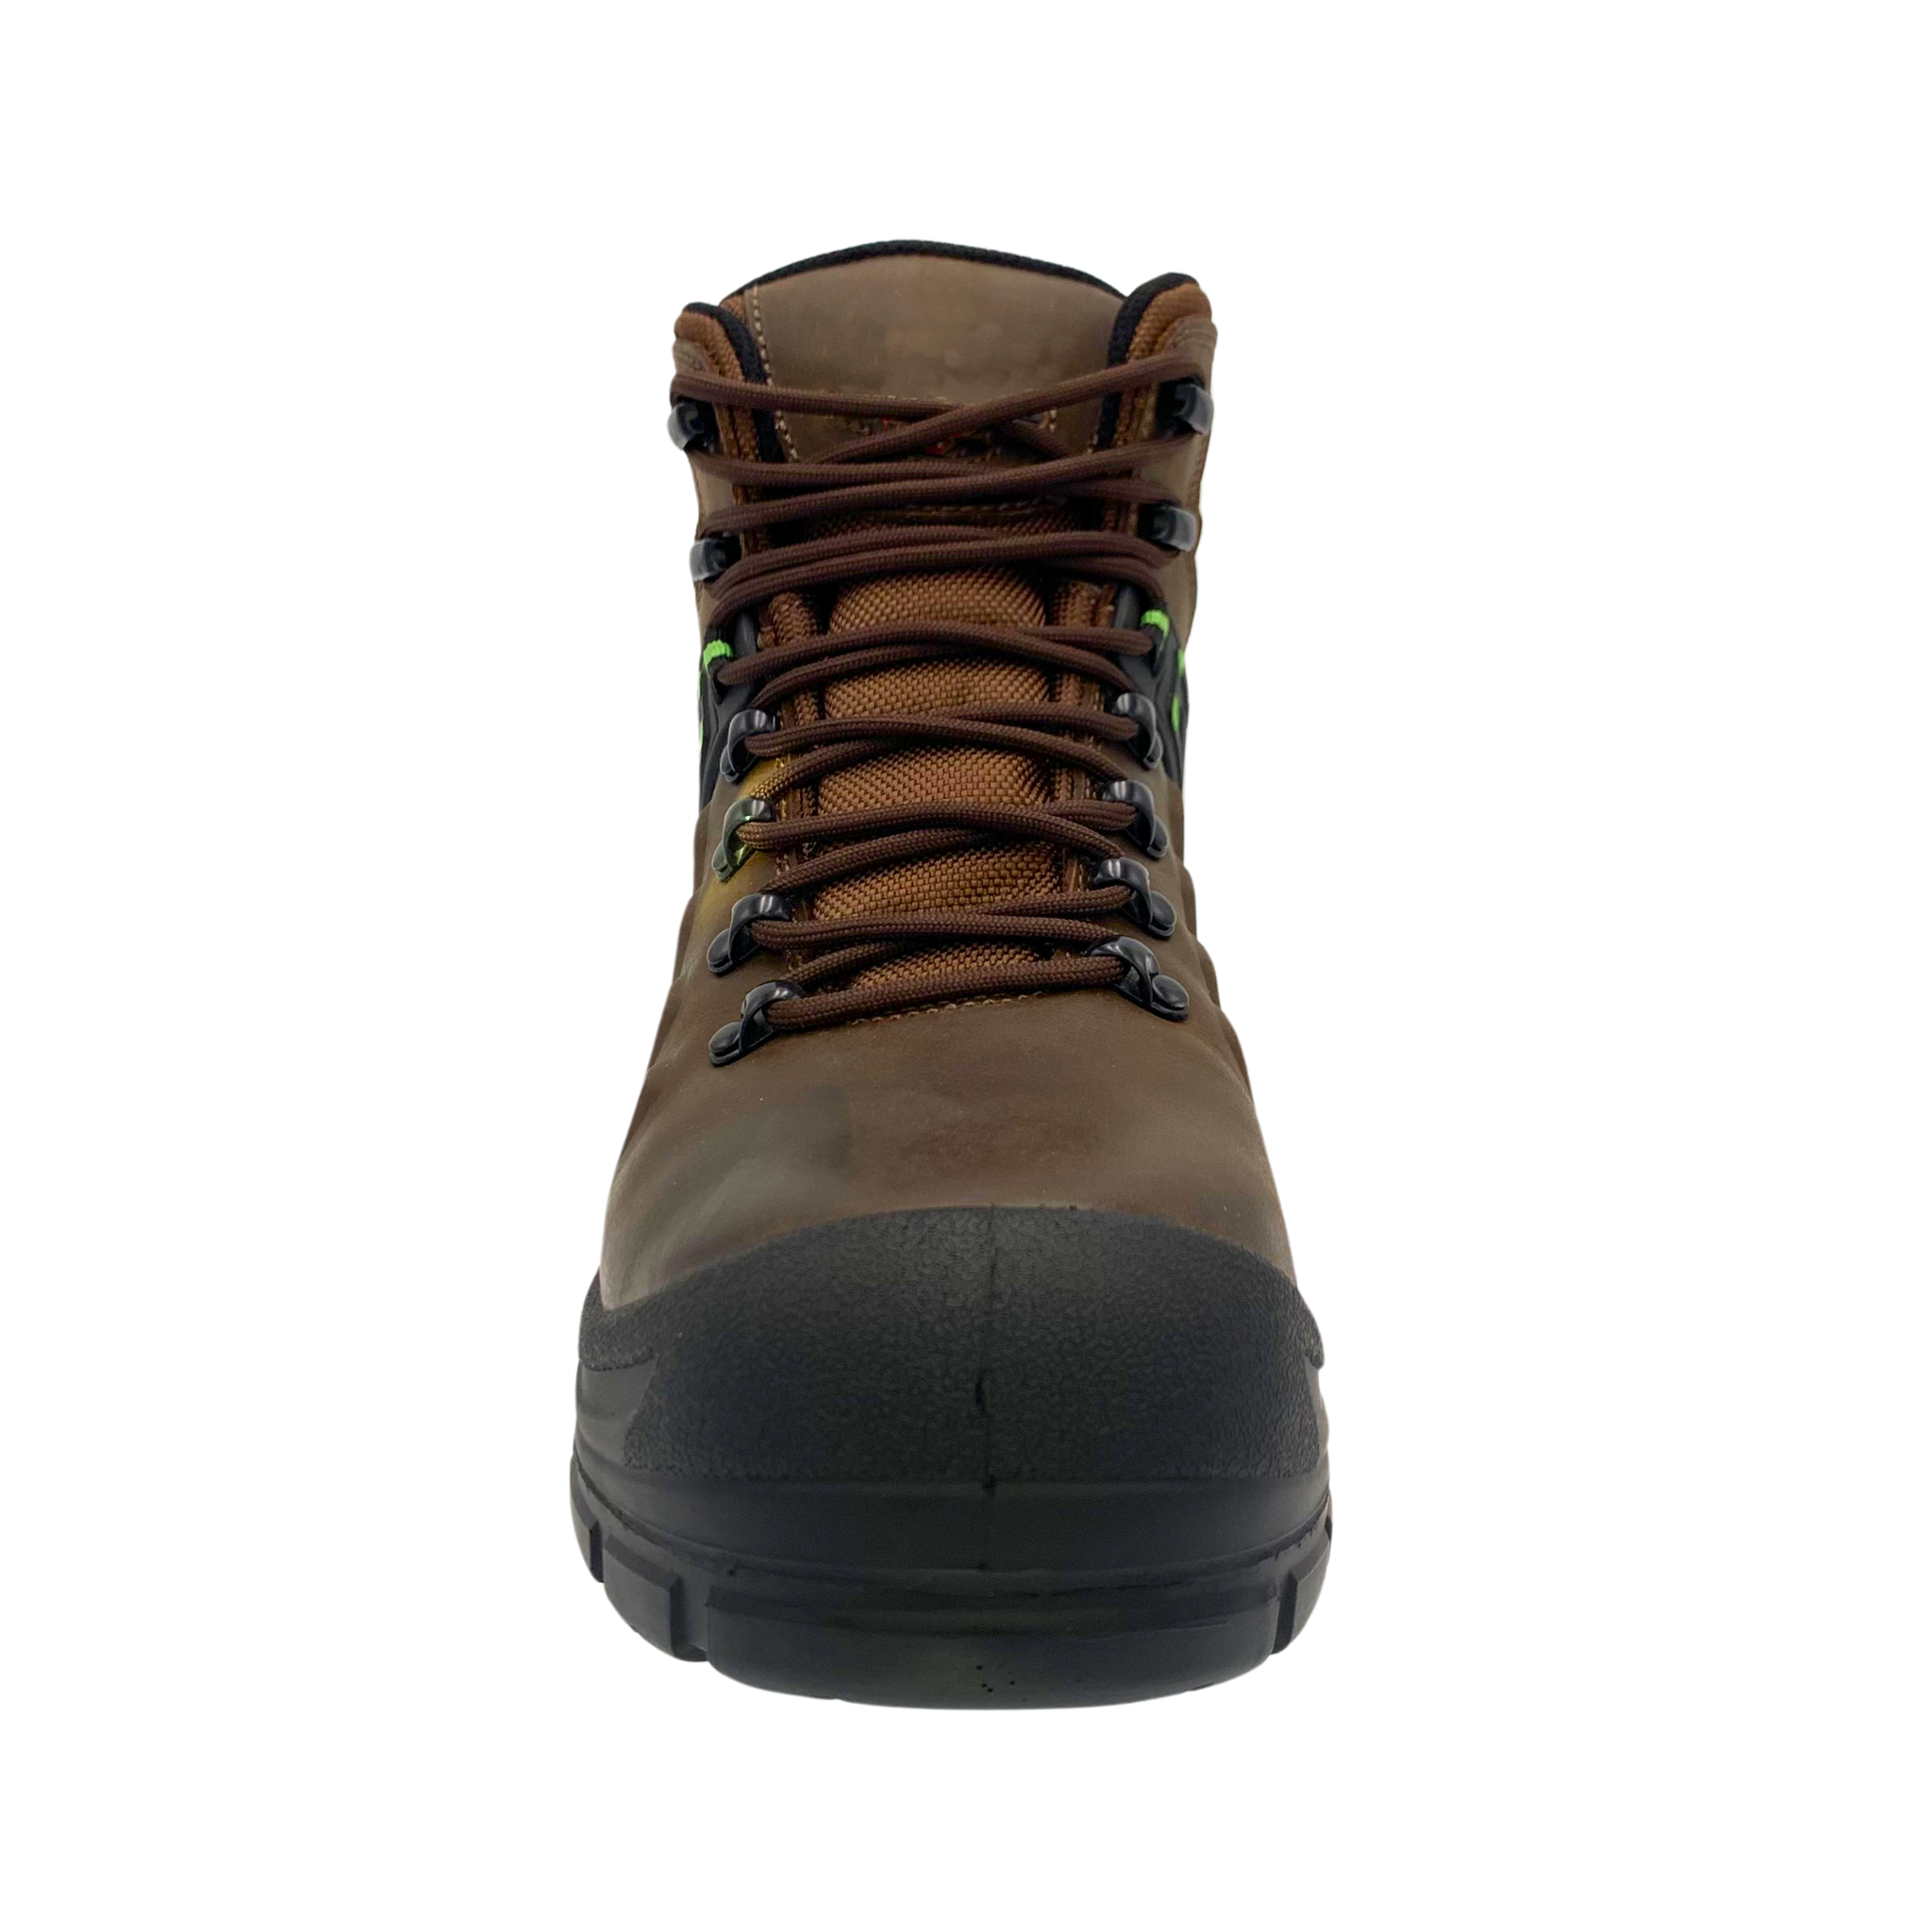 AdTec Men's 6" Brown waterproof composite safety toe leather work boot